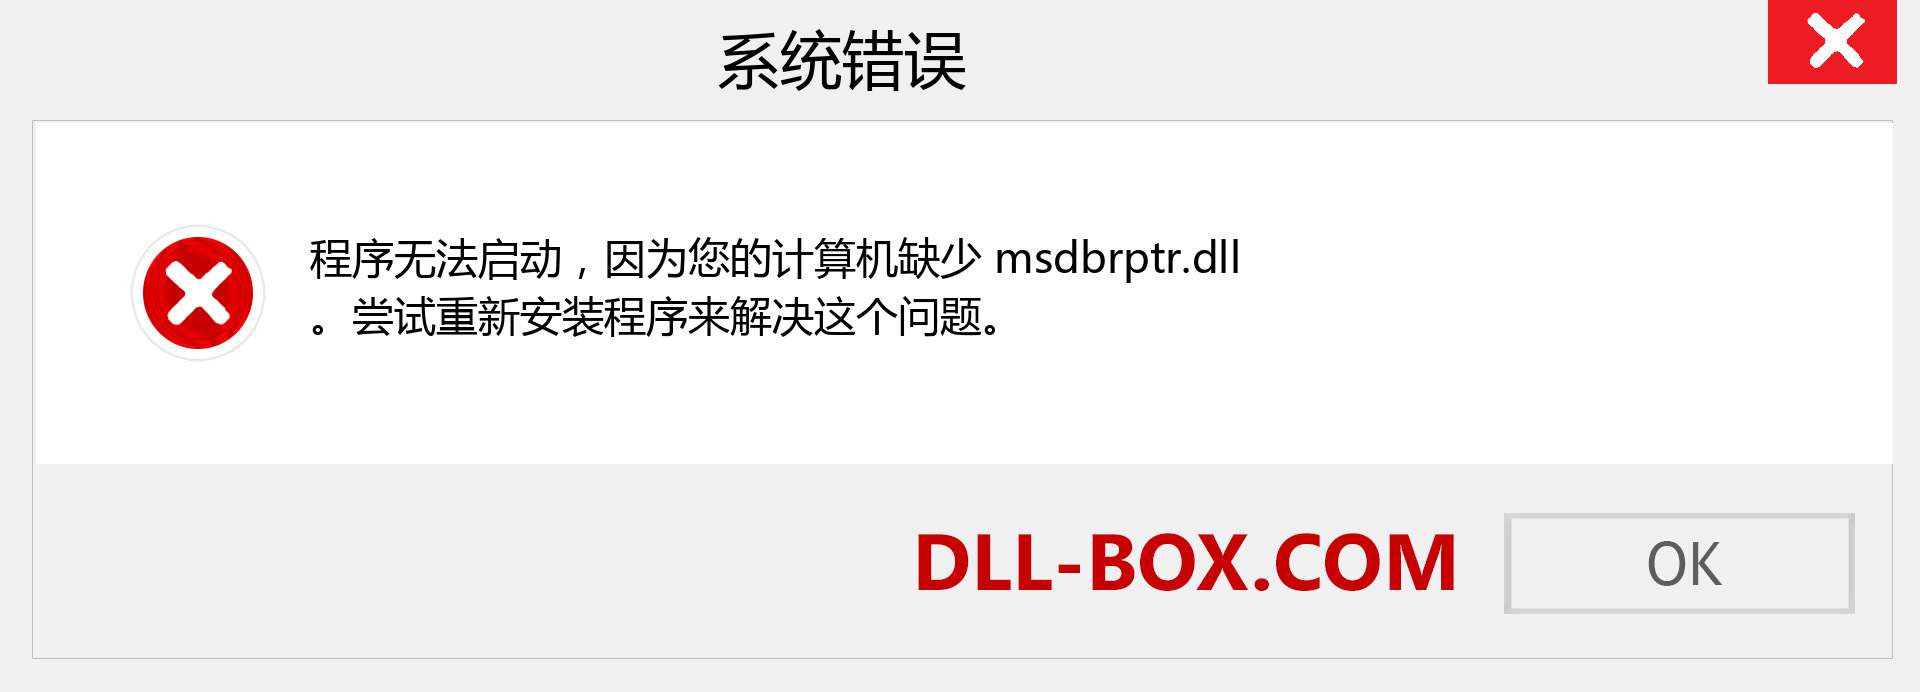 msdbrptr.dll 文件丢失？。 适用于 Windows 7、8、10 的下载 - 修复 Windows、照片、图像上的 msdbrptr dll 丢失错误